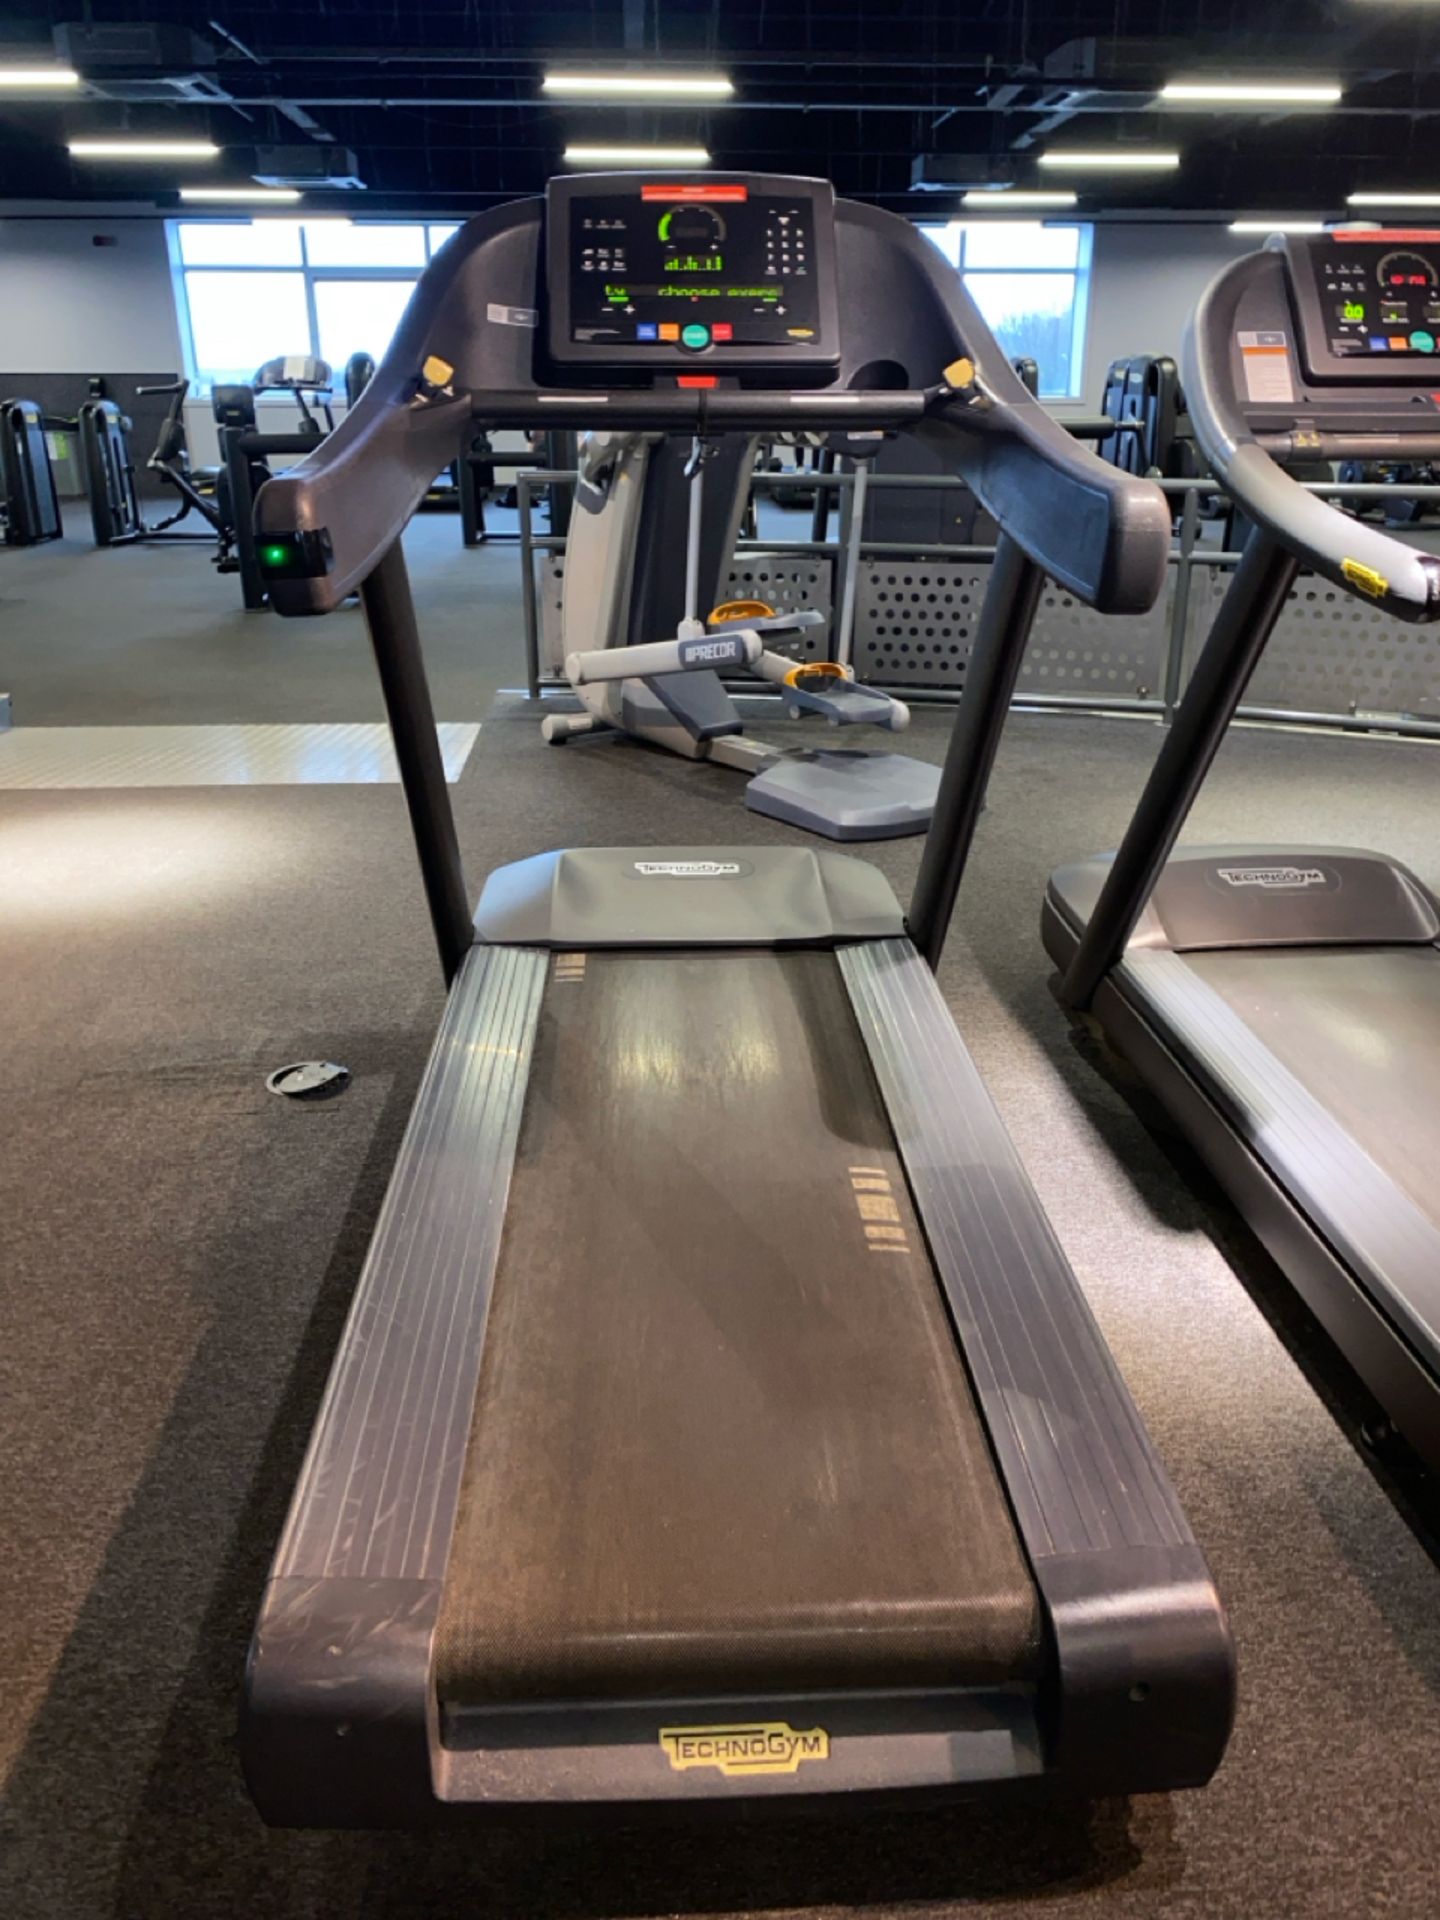 Technogym Excite Run 1000 Treadmill - Image 2 of 8